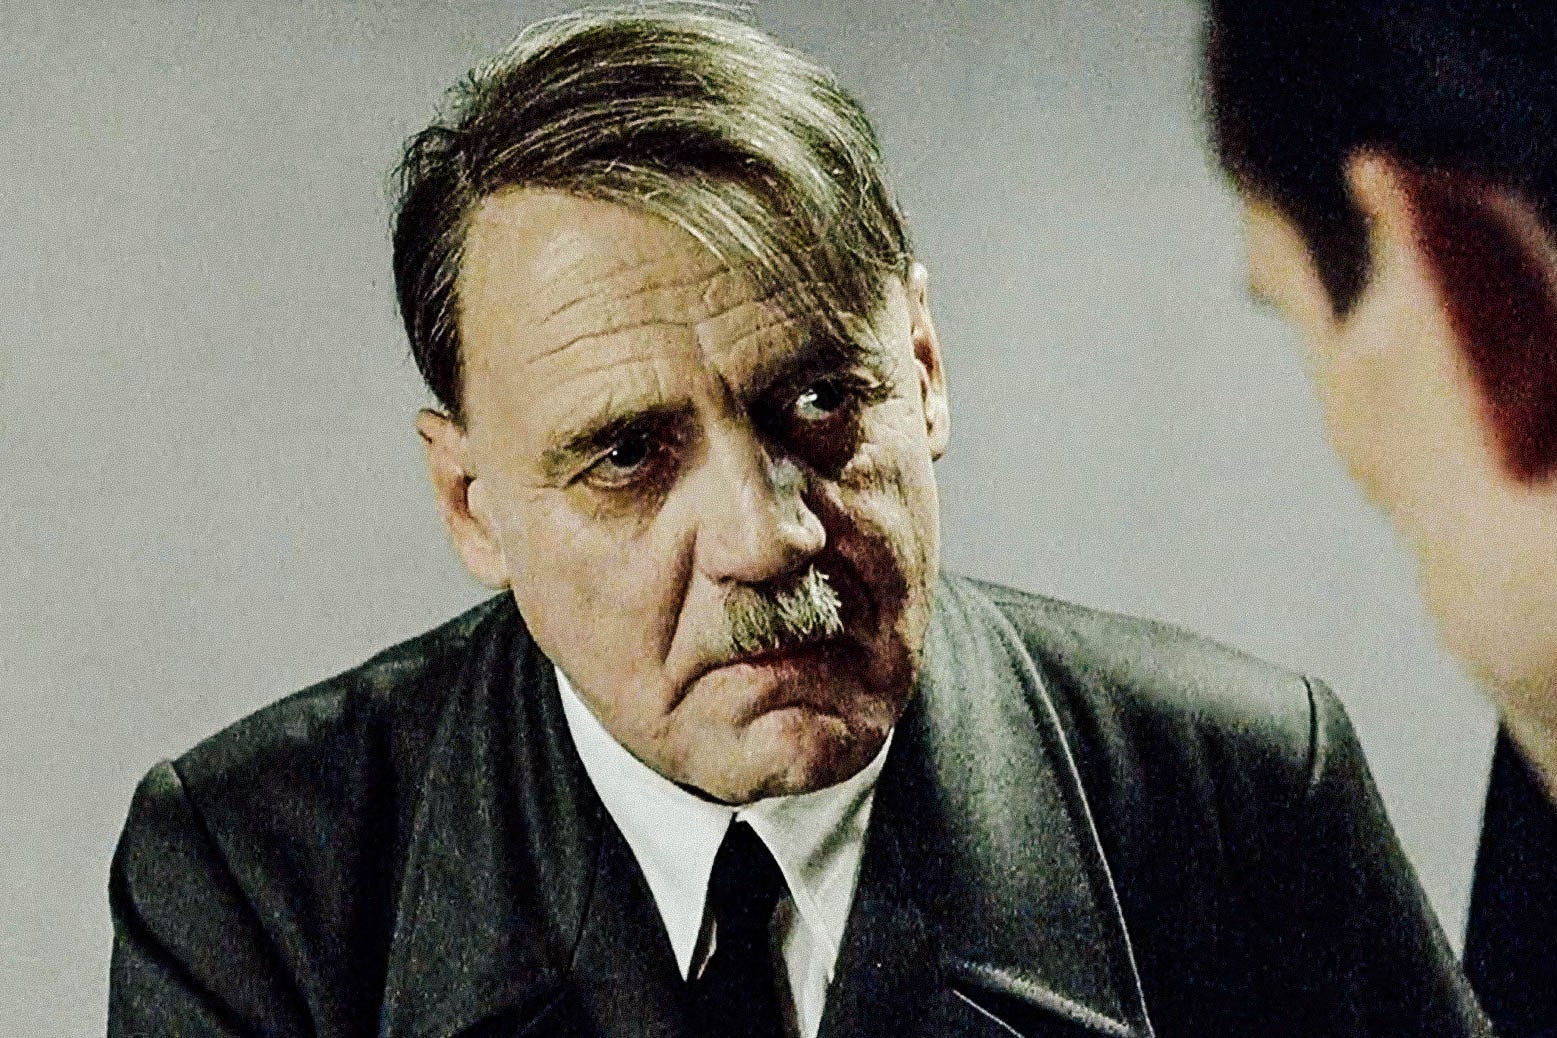 Bruno Ganz as Hitler in Downfall.